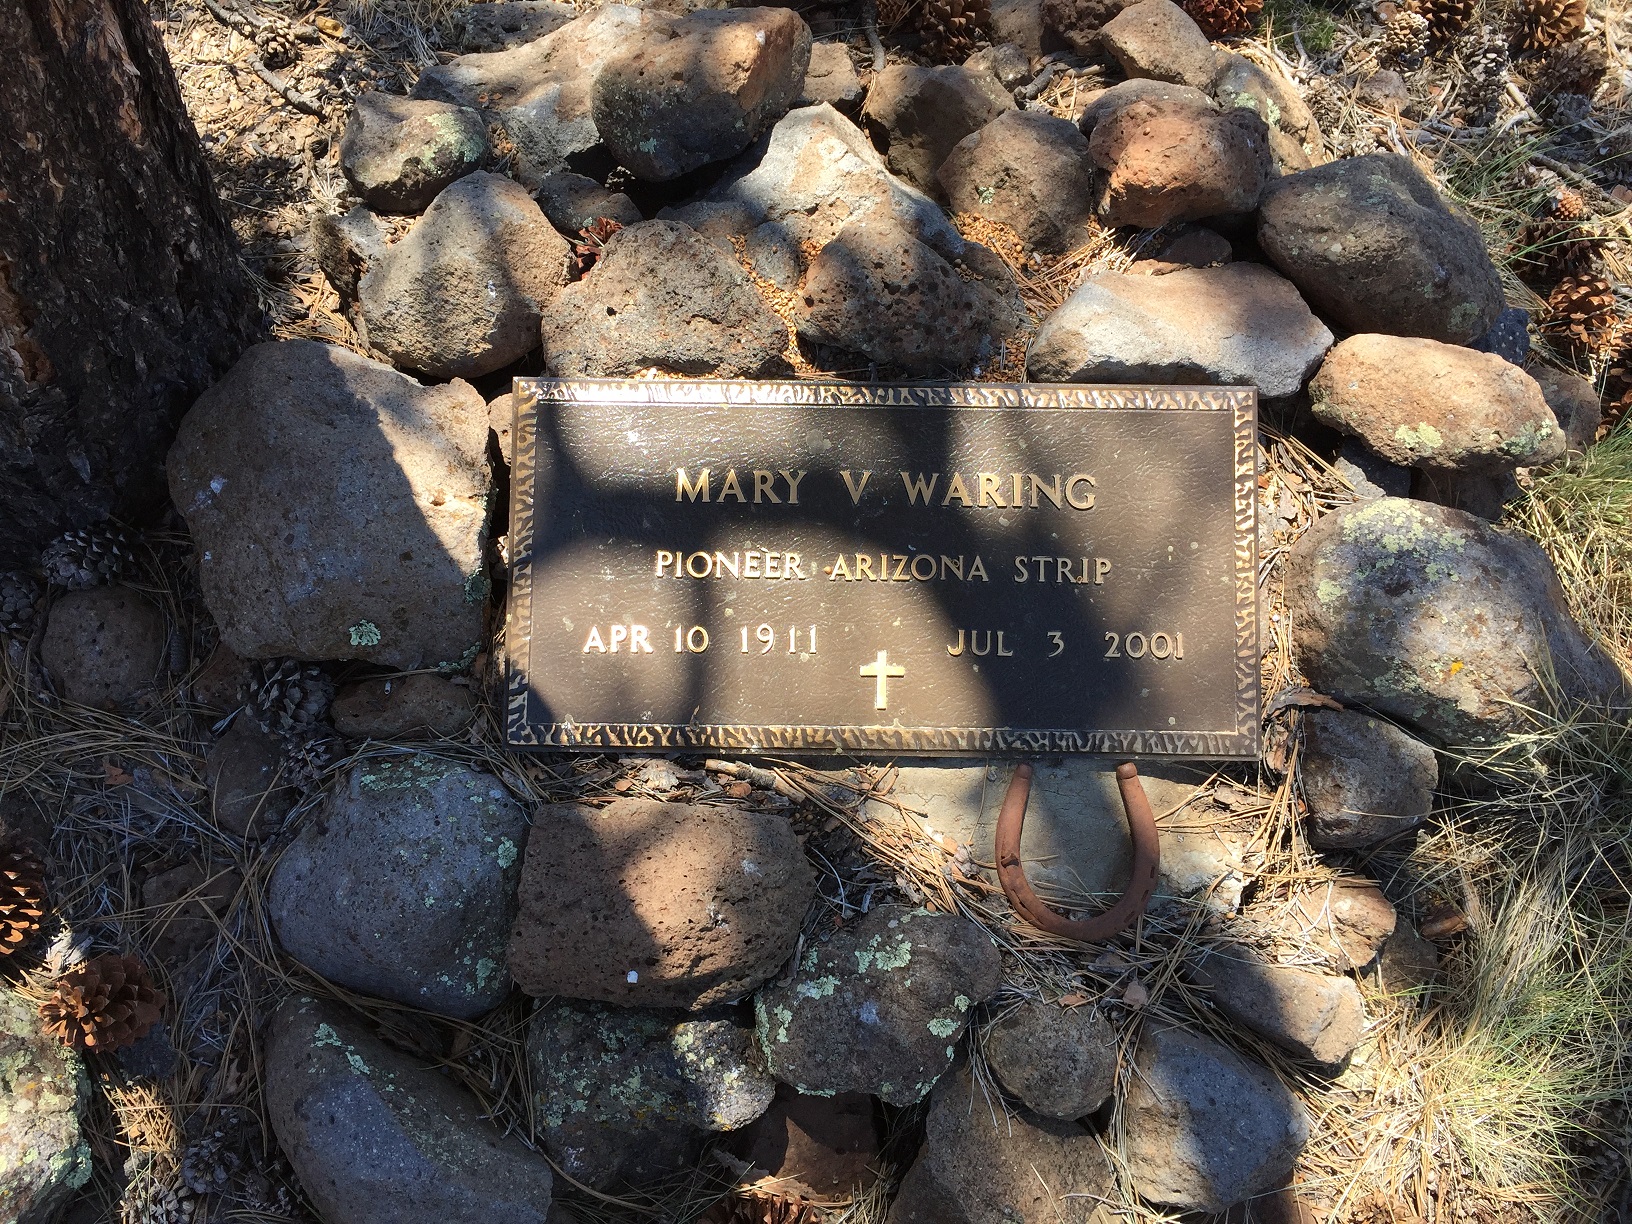 Gravestone of Mary V. Waring at the Waring cabin